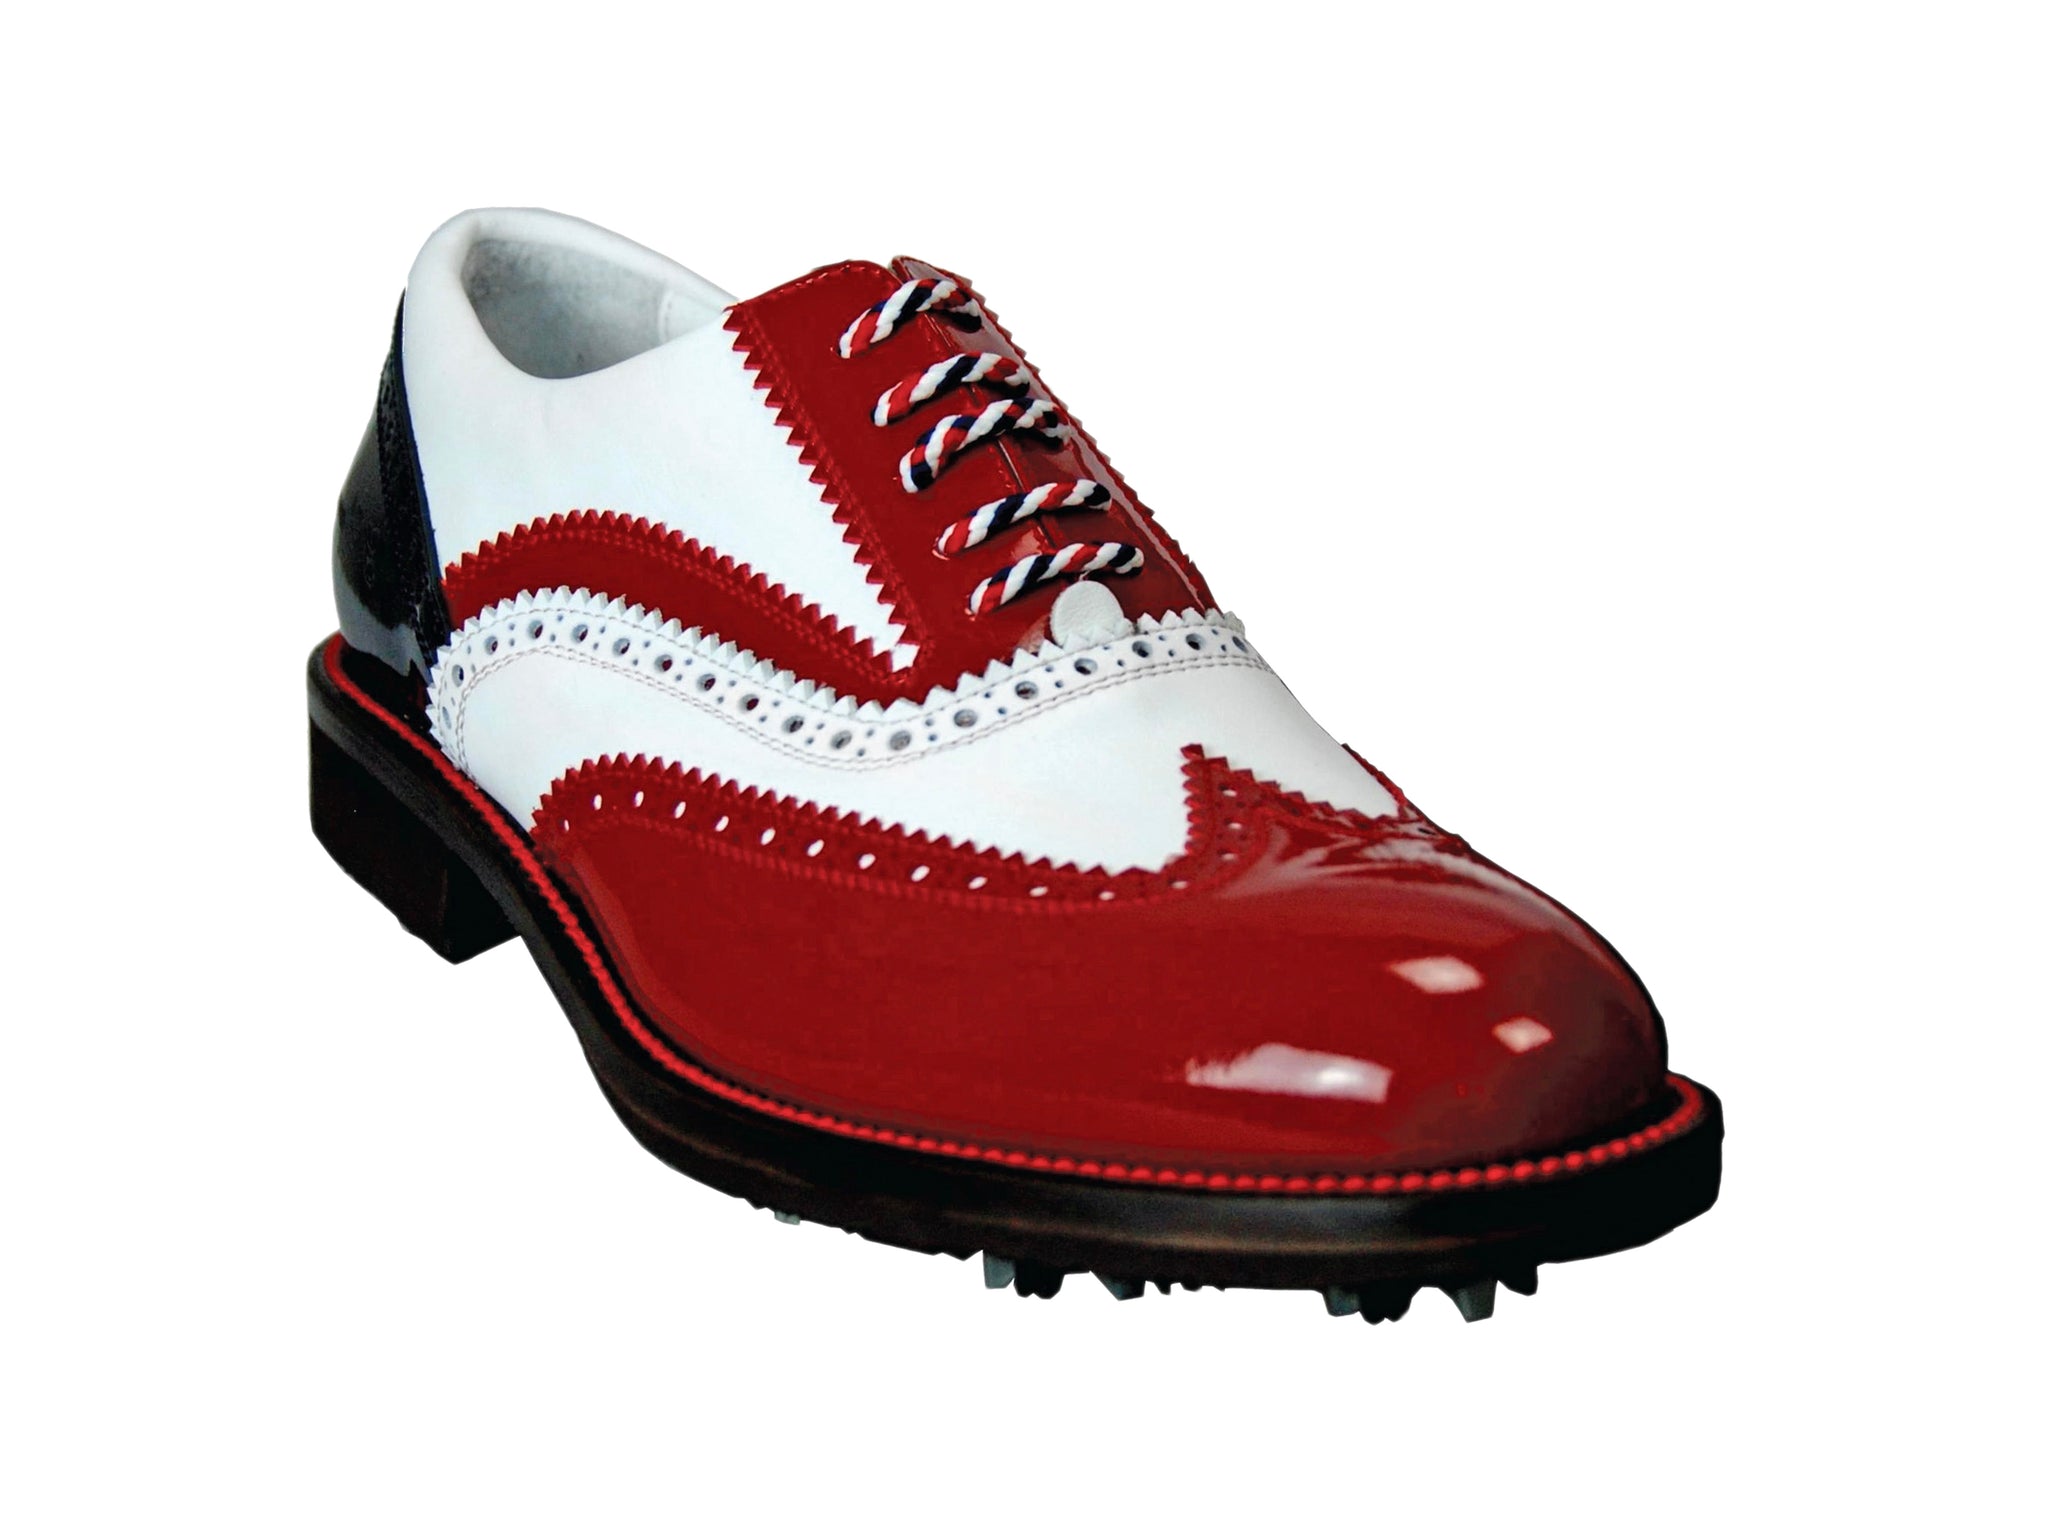 bespoke golf shoes